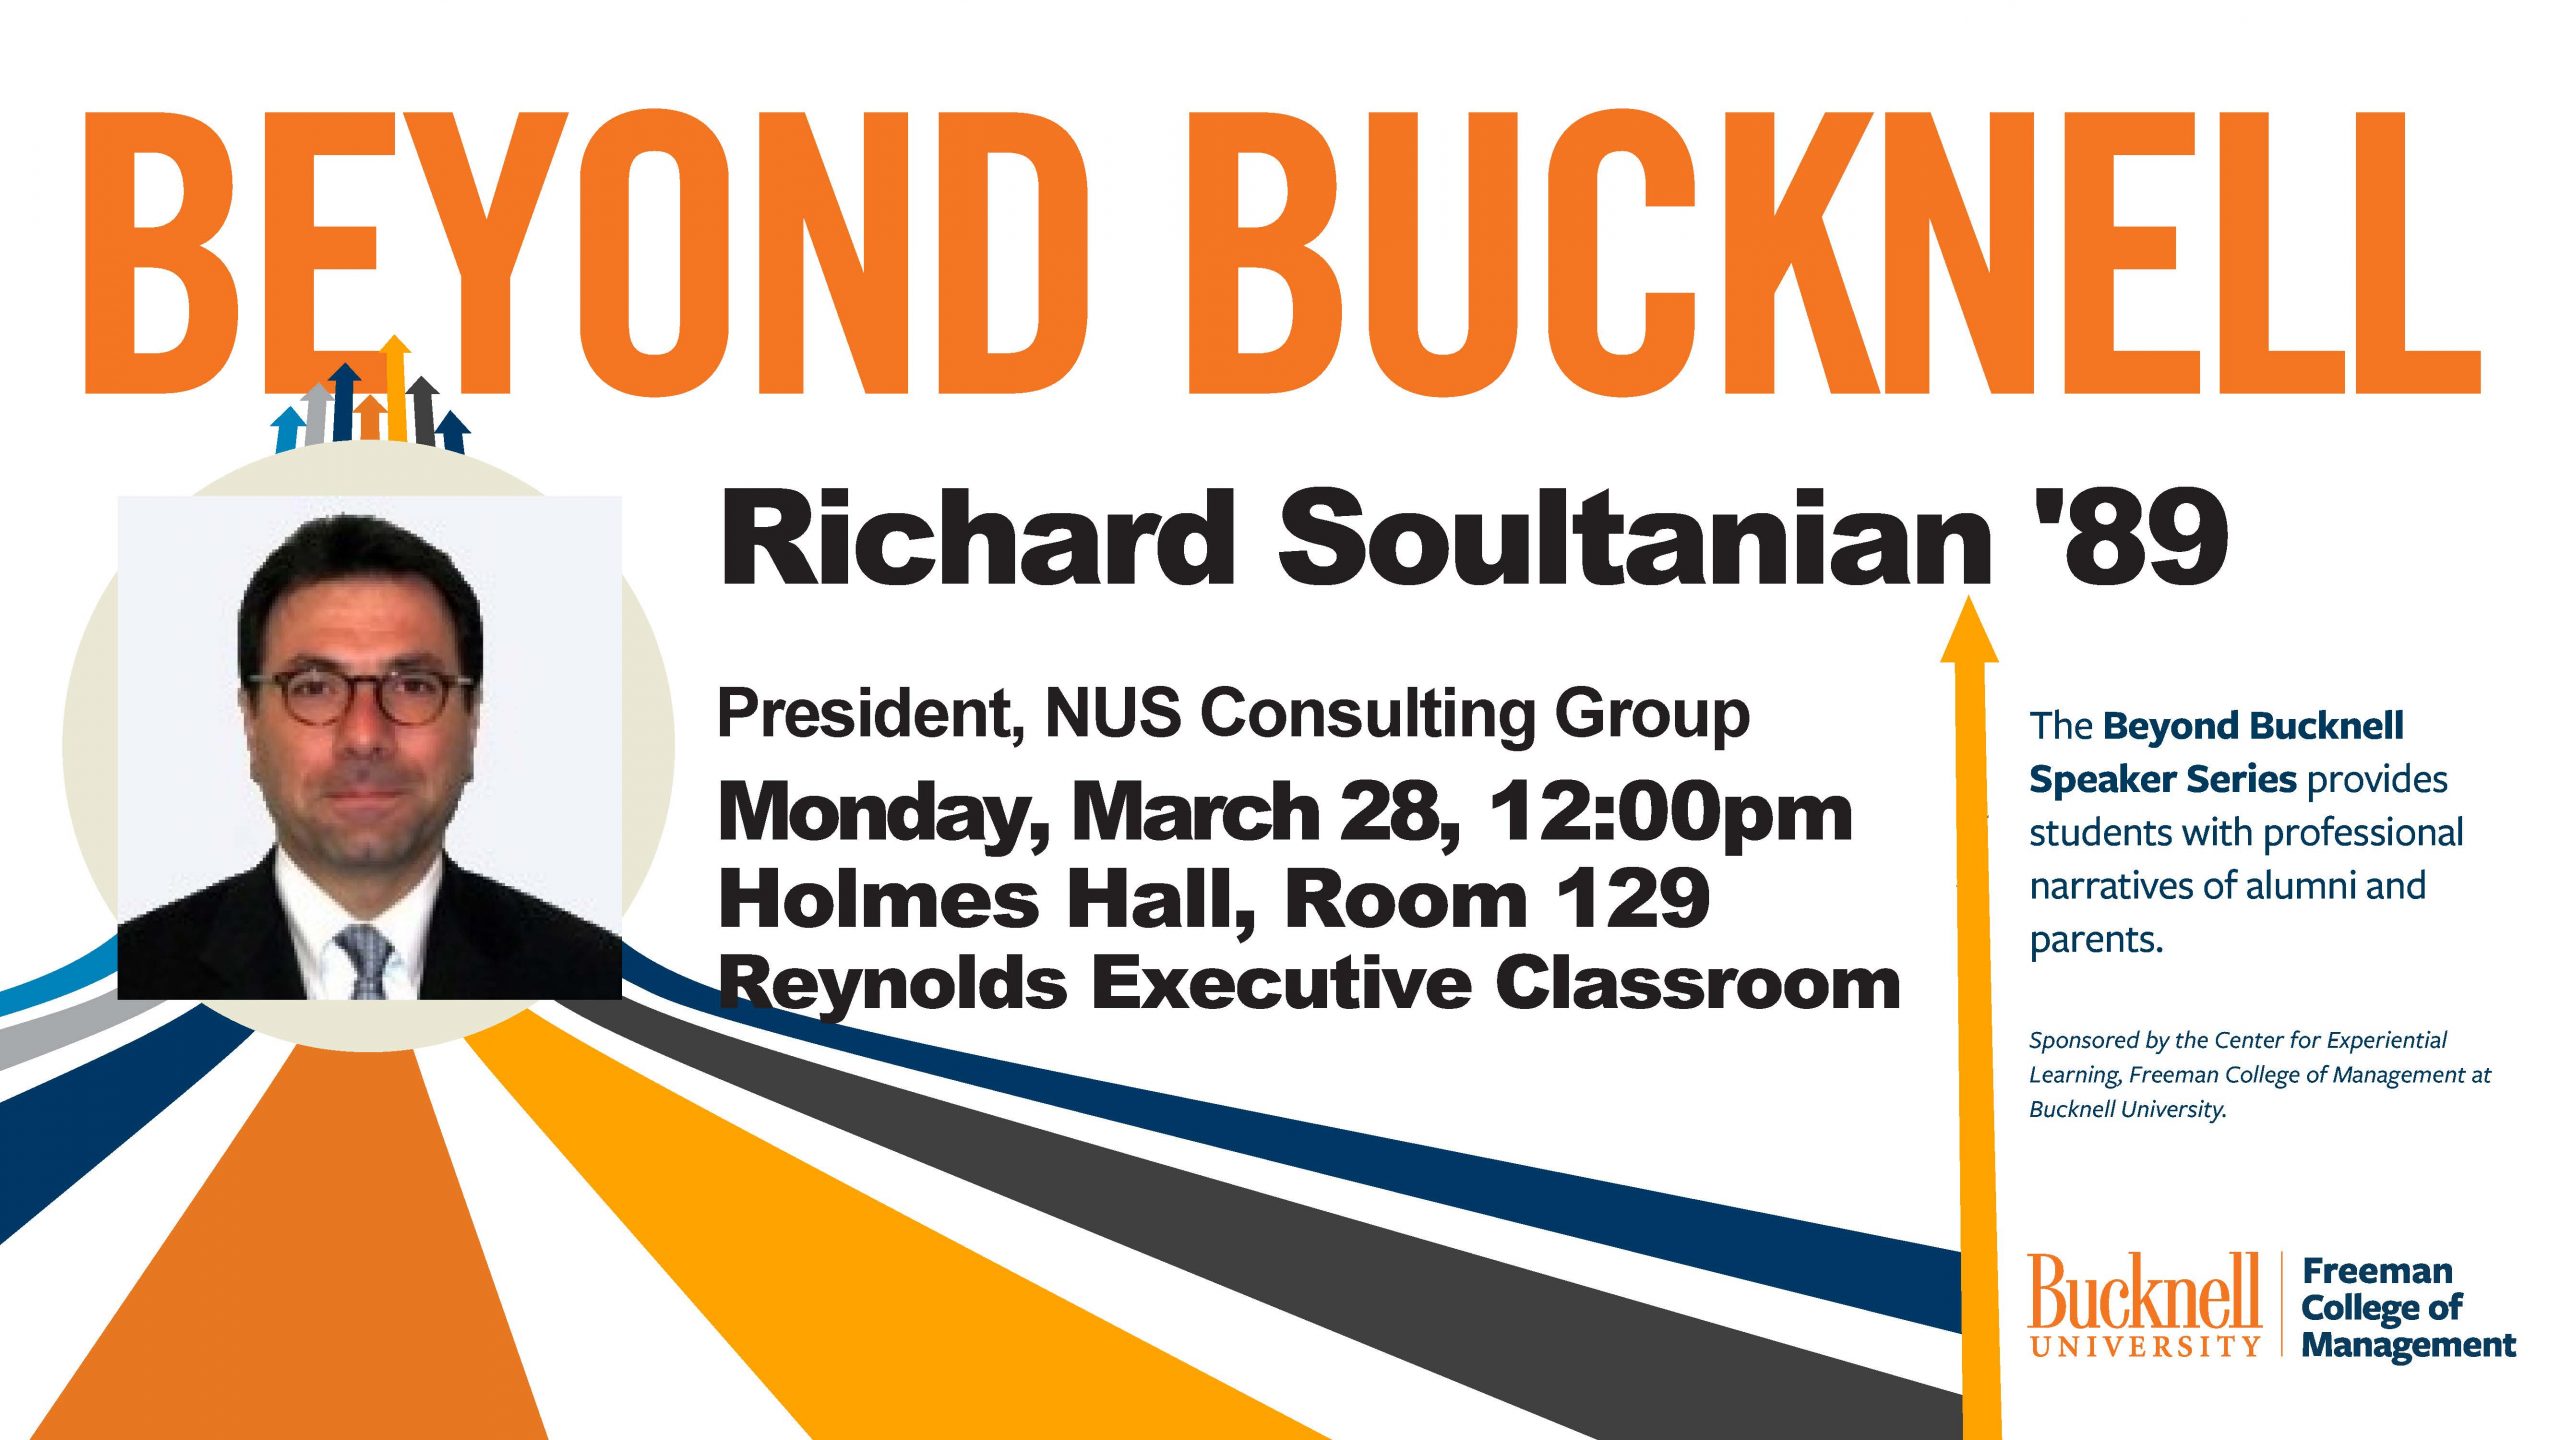 Beyond Bucknell Speaker Series presents Richard Soultanian ’89